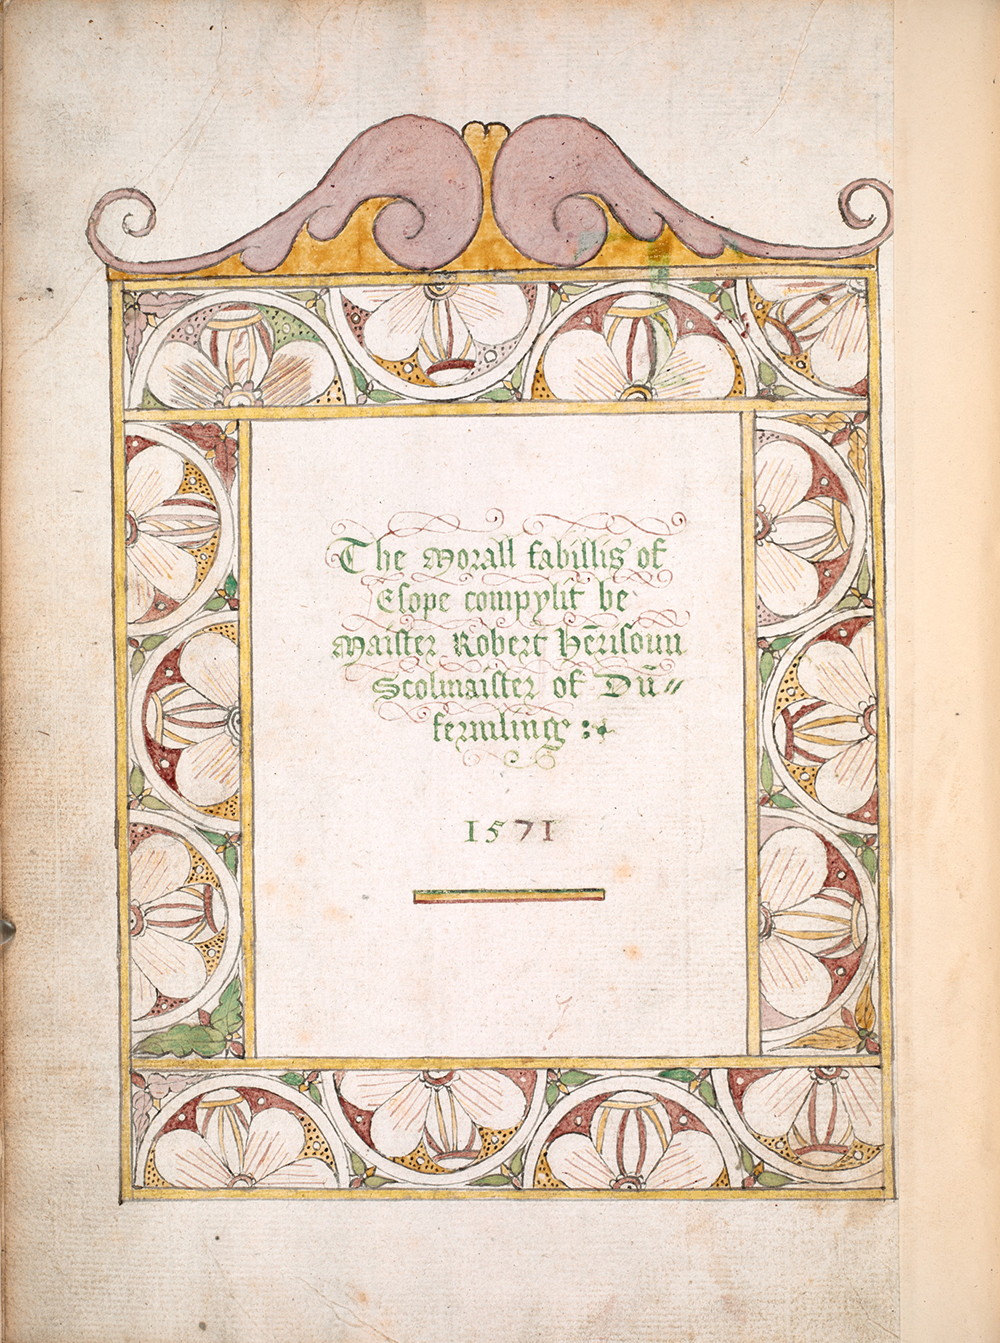 The Morall Fabillis, by Robert Henryson, 1571.